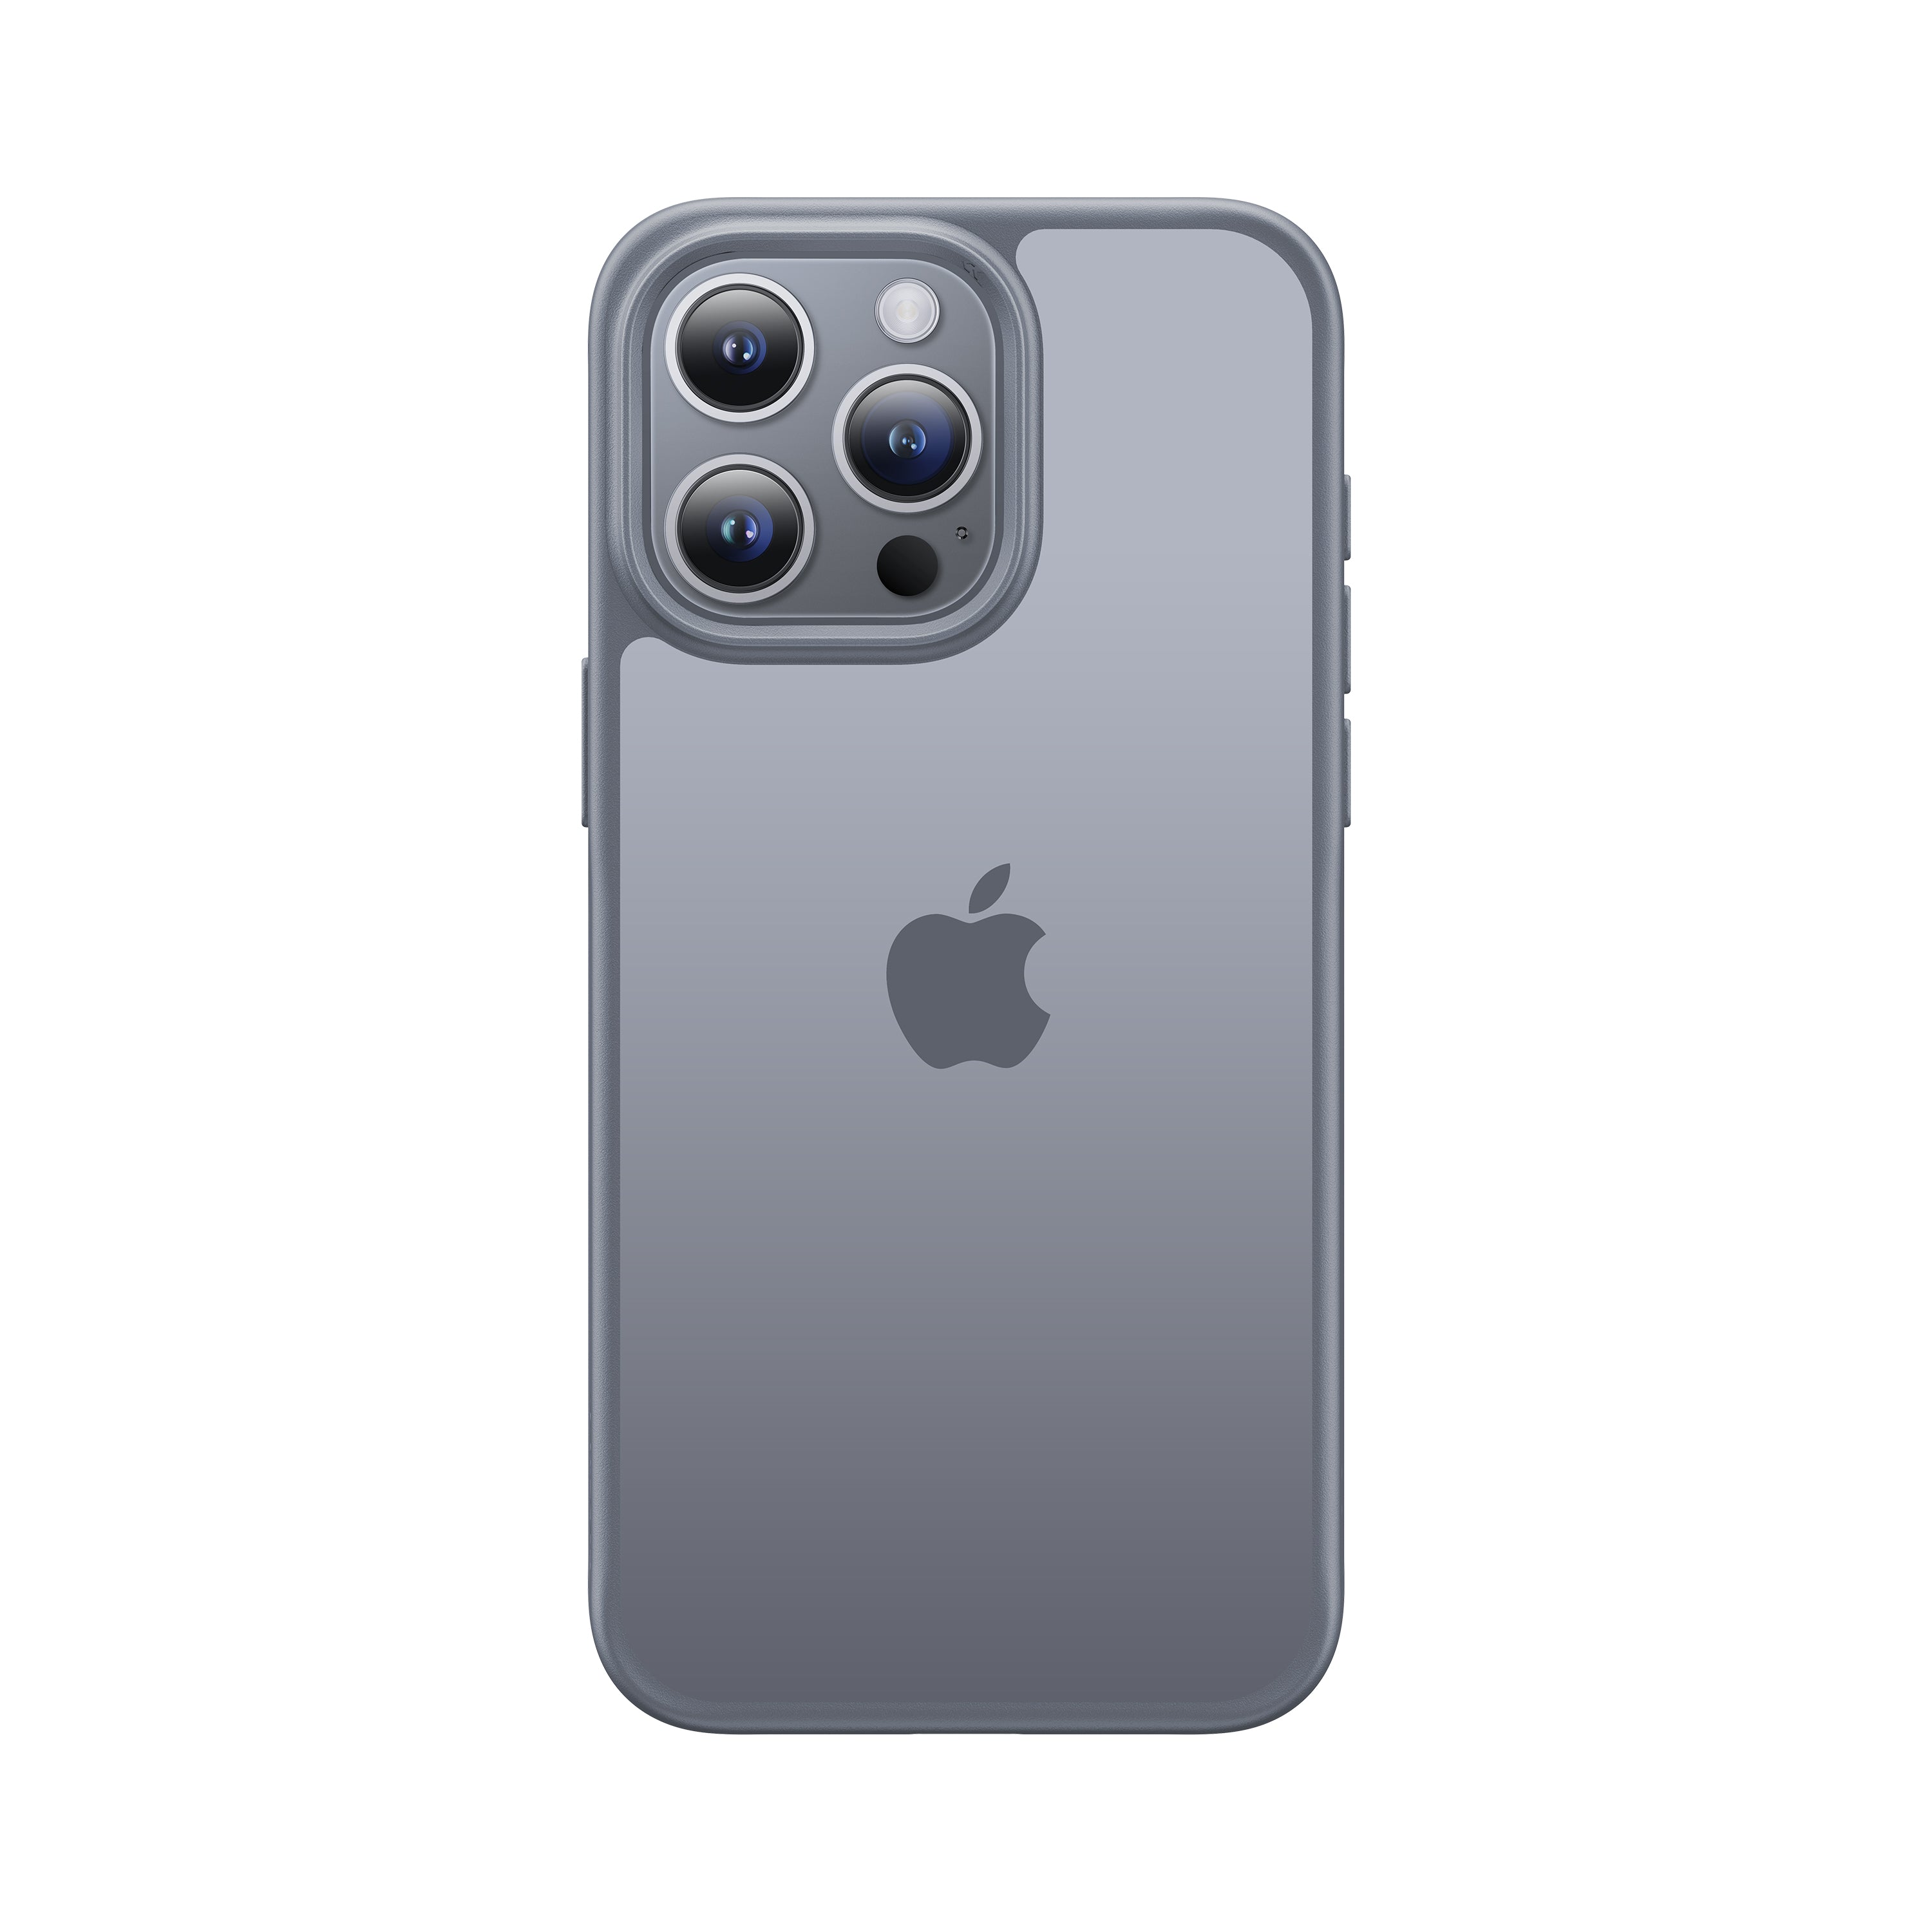 Cascov (Camera Protection) Matte Case Cover for iPhone 12 Mini - Black -  Phone Smart